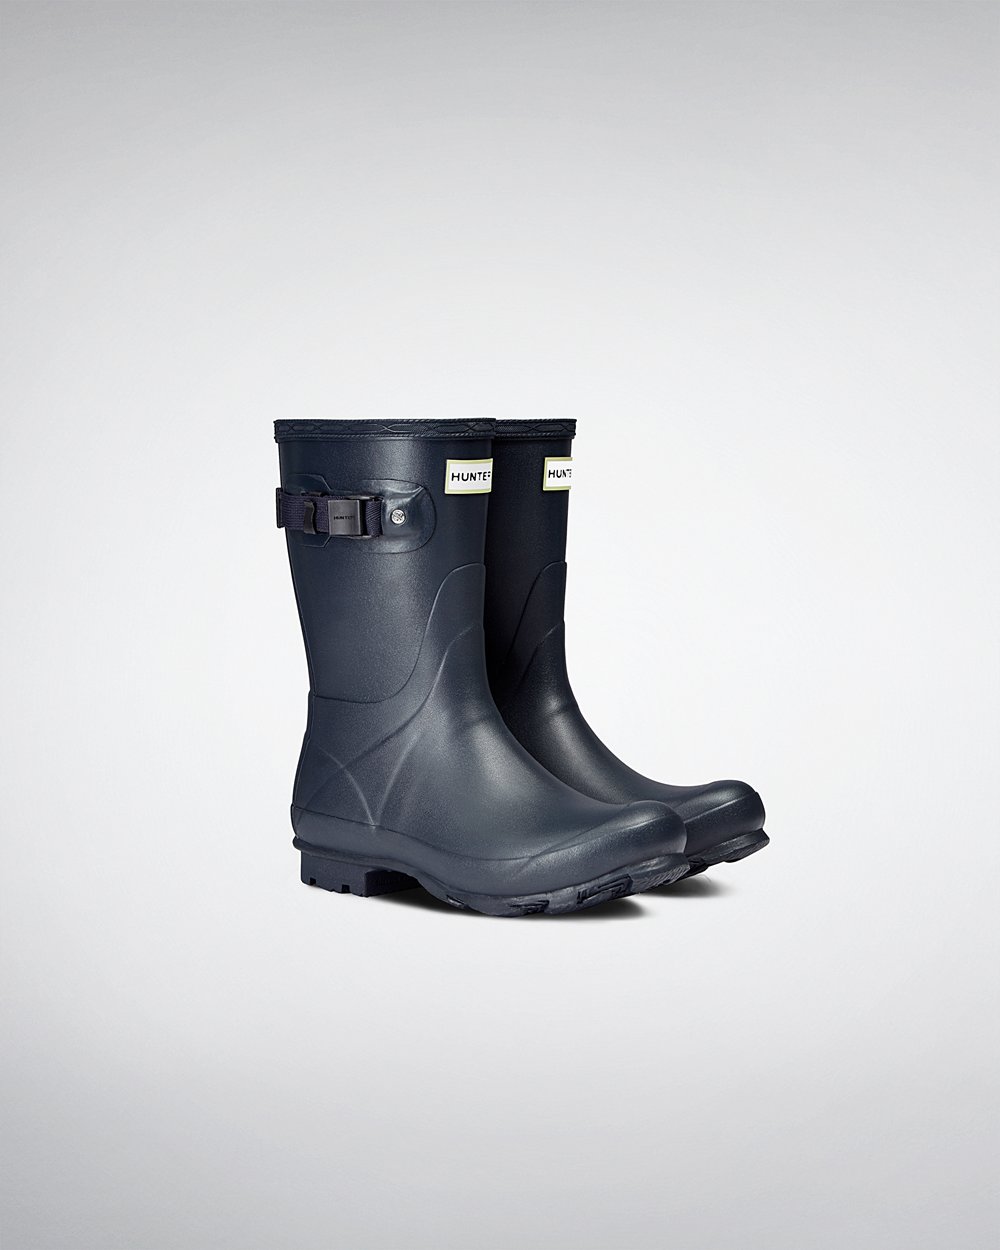 Womens Short Rain Boots - Hunter Norris Field (50ZYXUVIH) - Navy